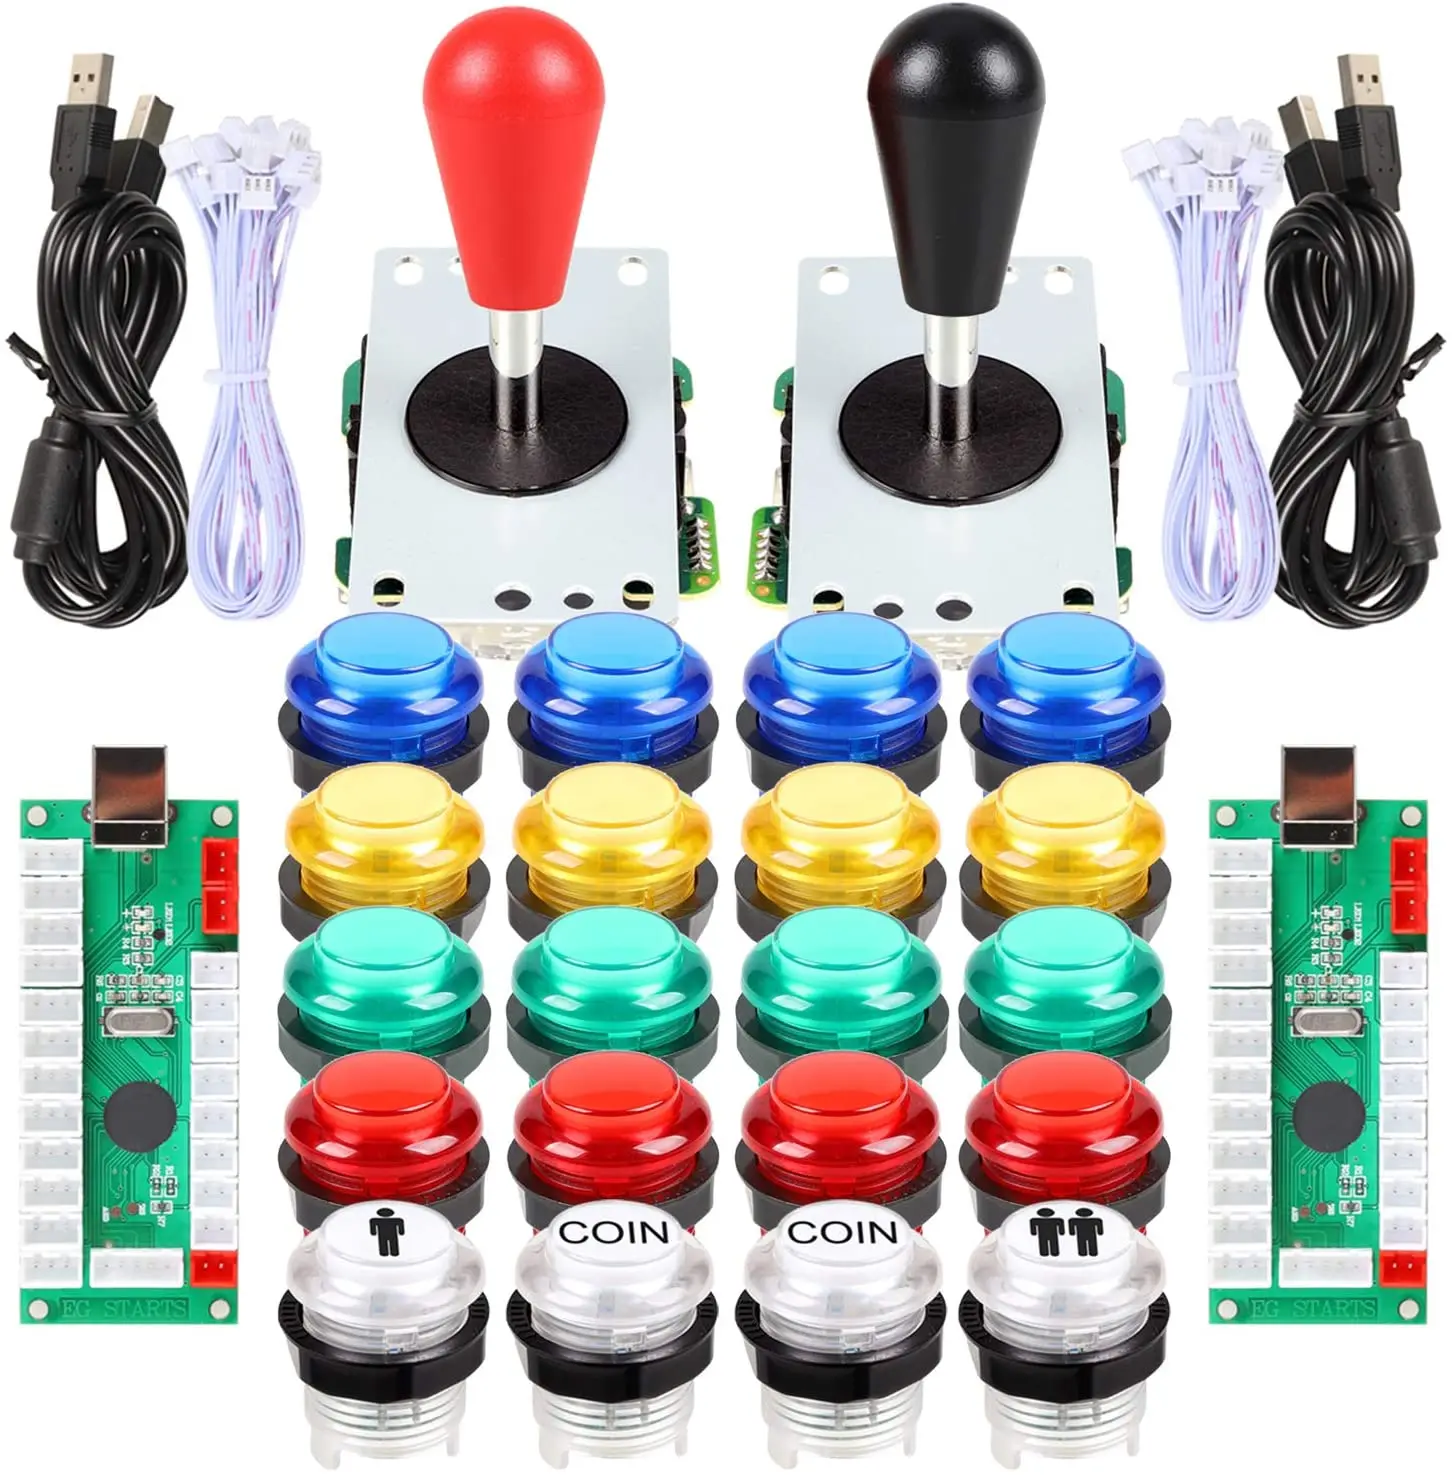 

EG Starts 2 Player LED Arcade DIY USB Encoder to Ellipse Oval Style Joystick LED Arcade Buttons for PC MAME Raspberry Pi Windows